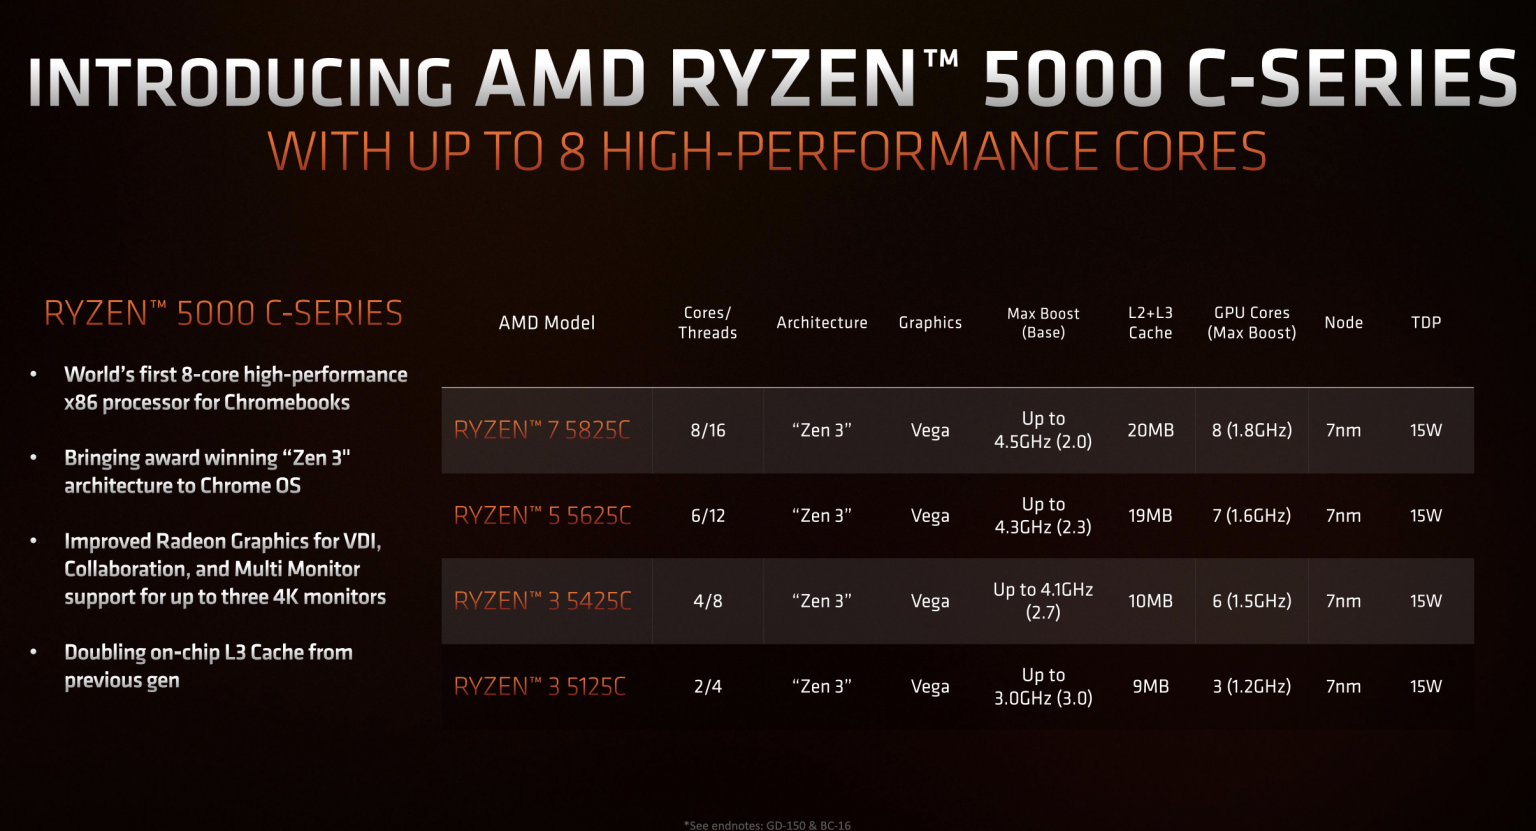 AMD Ryzen 5000 C-Series